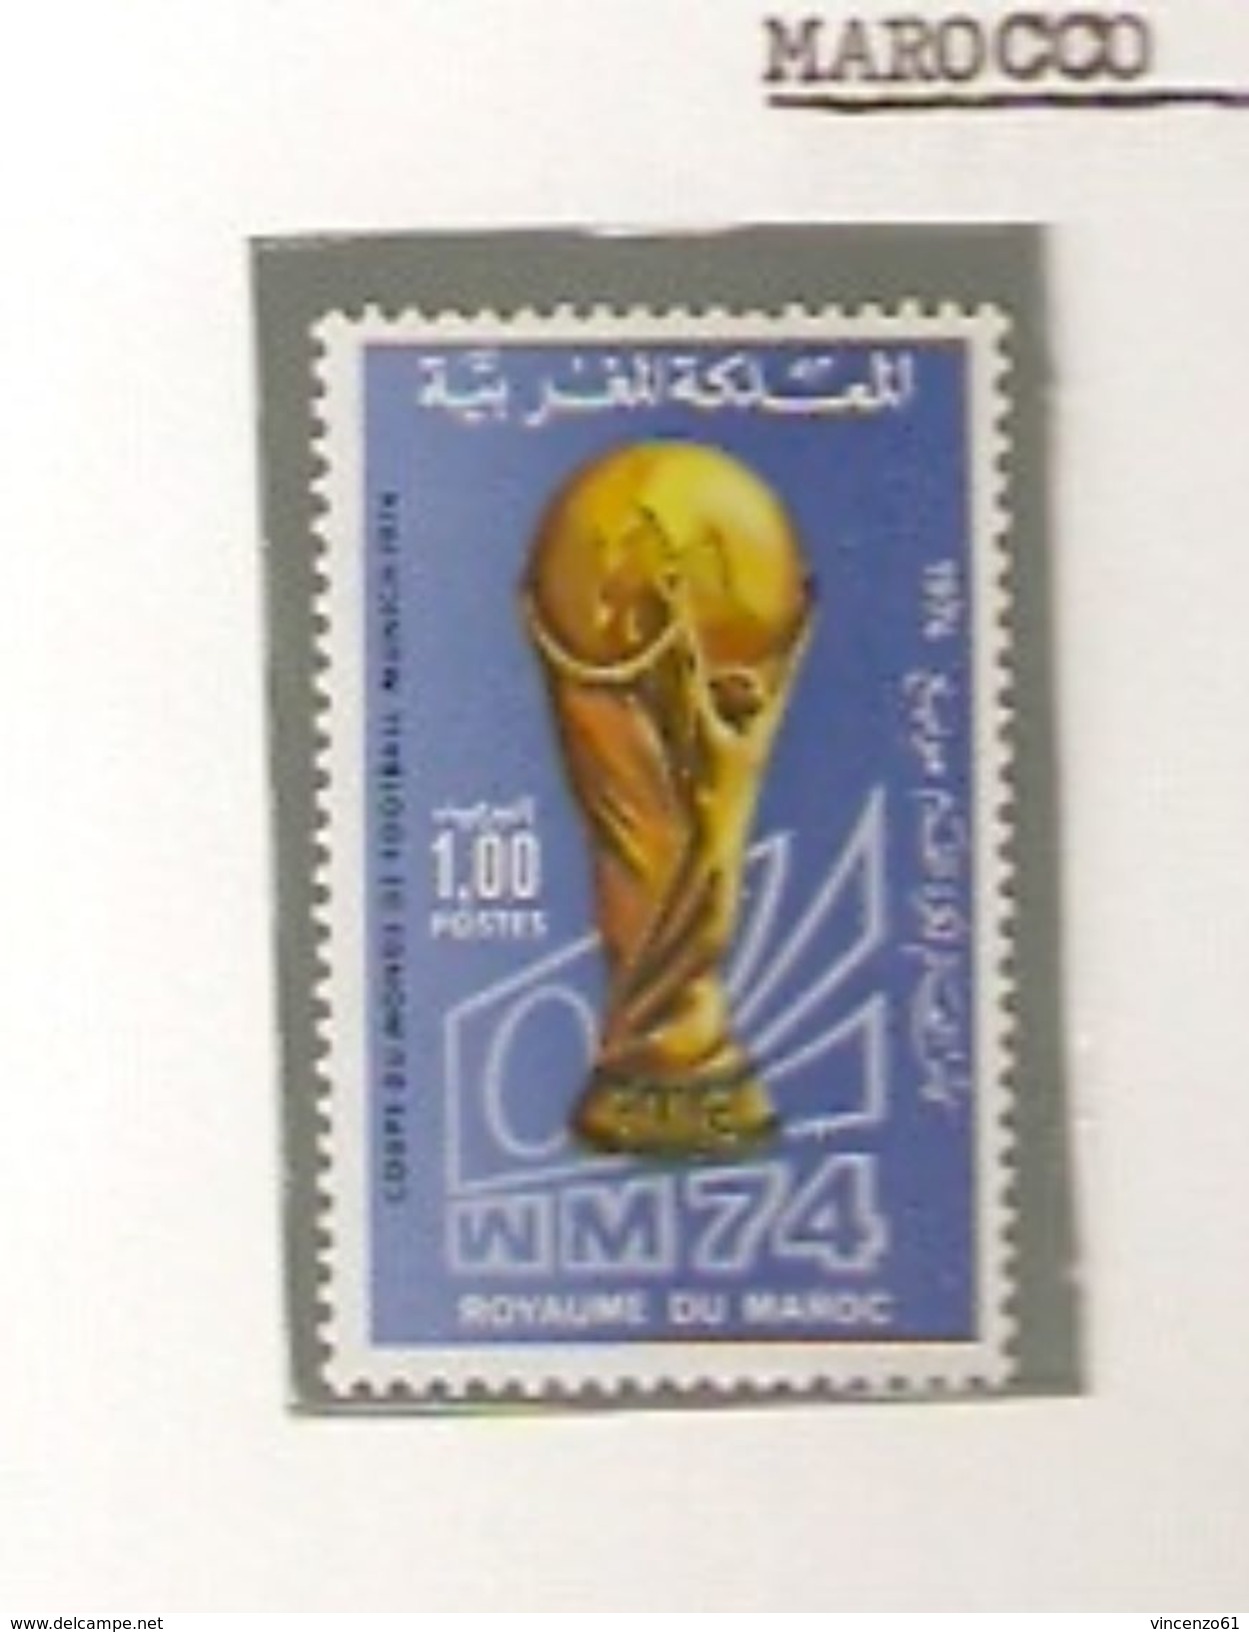 MAROCCO  MAROC FIFA WORLD CUP 1974 GERMANY 1974 - 1974 – Germania Ovest